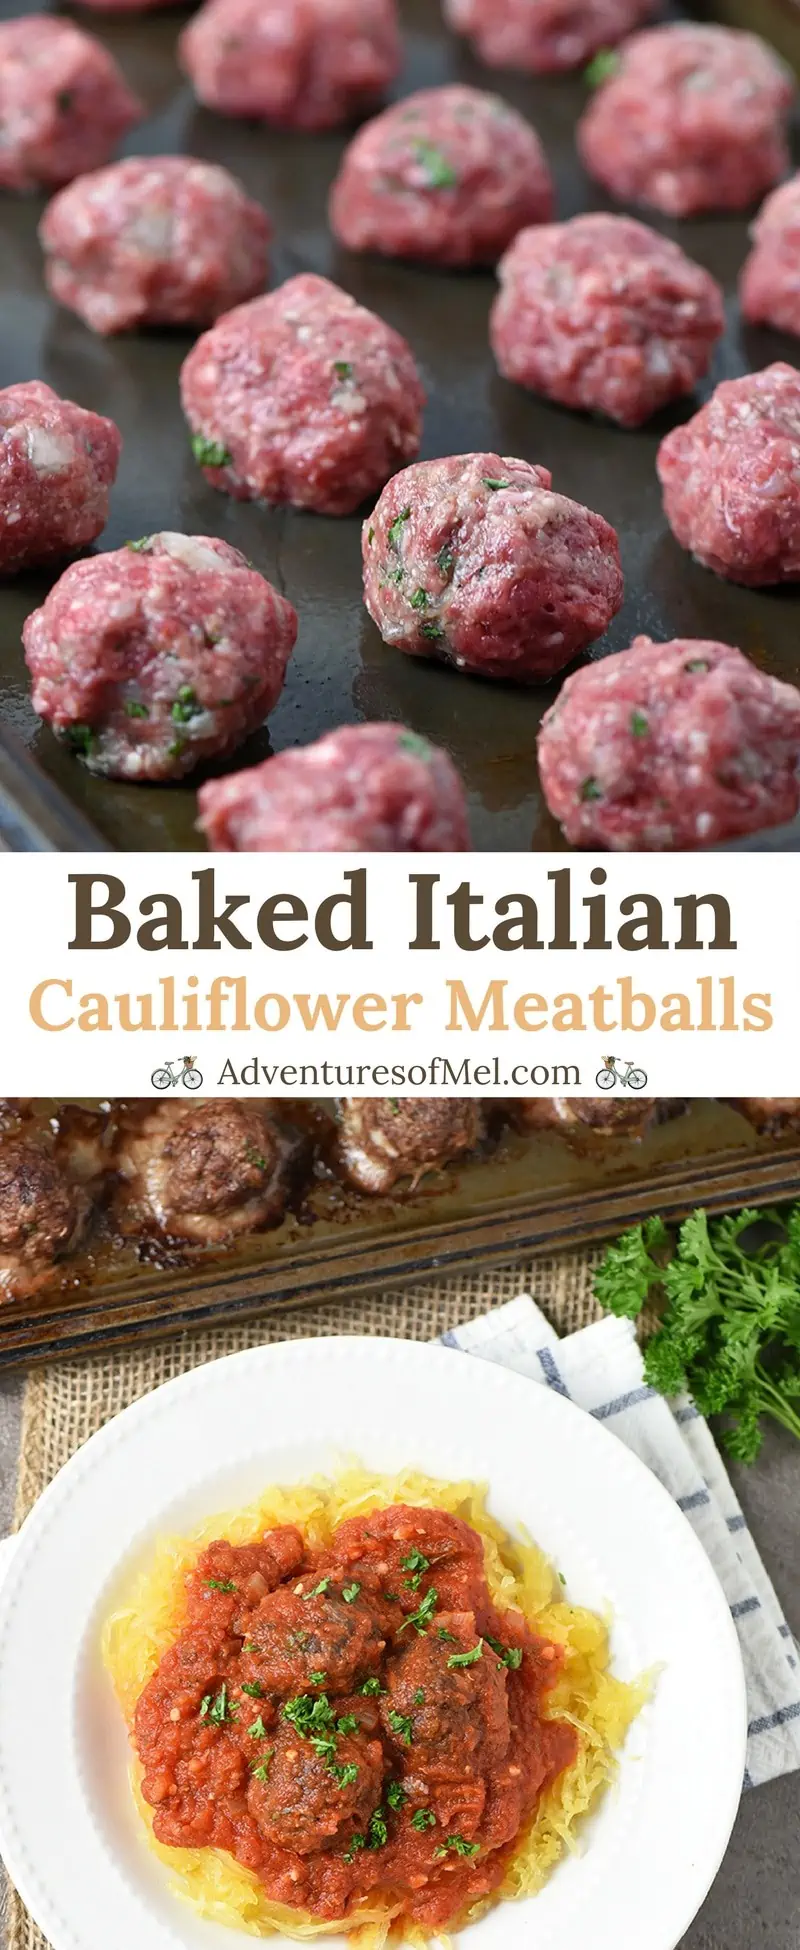 Baked Italian Cauliflower Meatballs Recipe